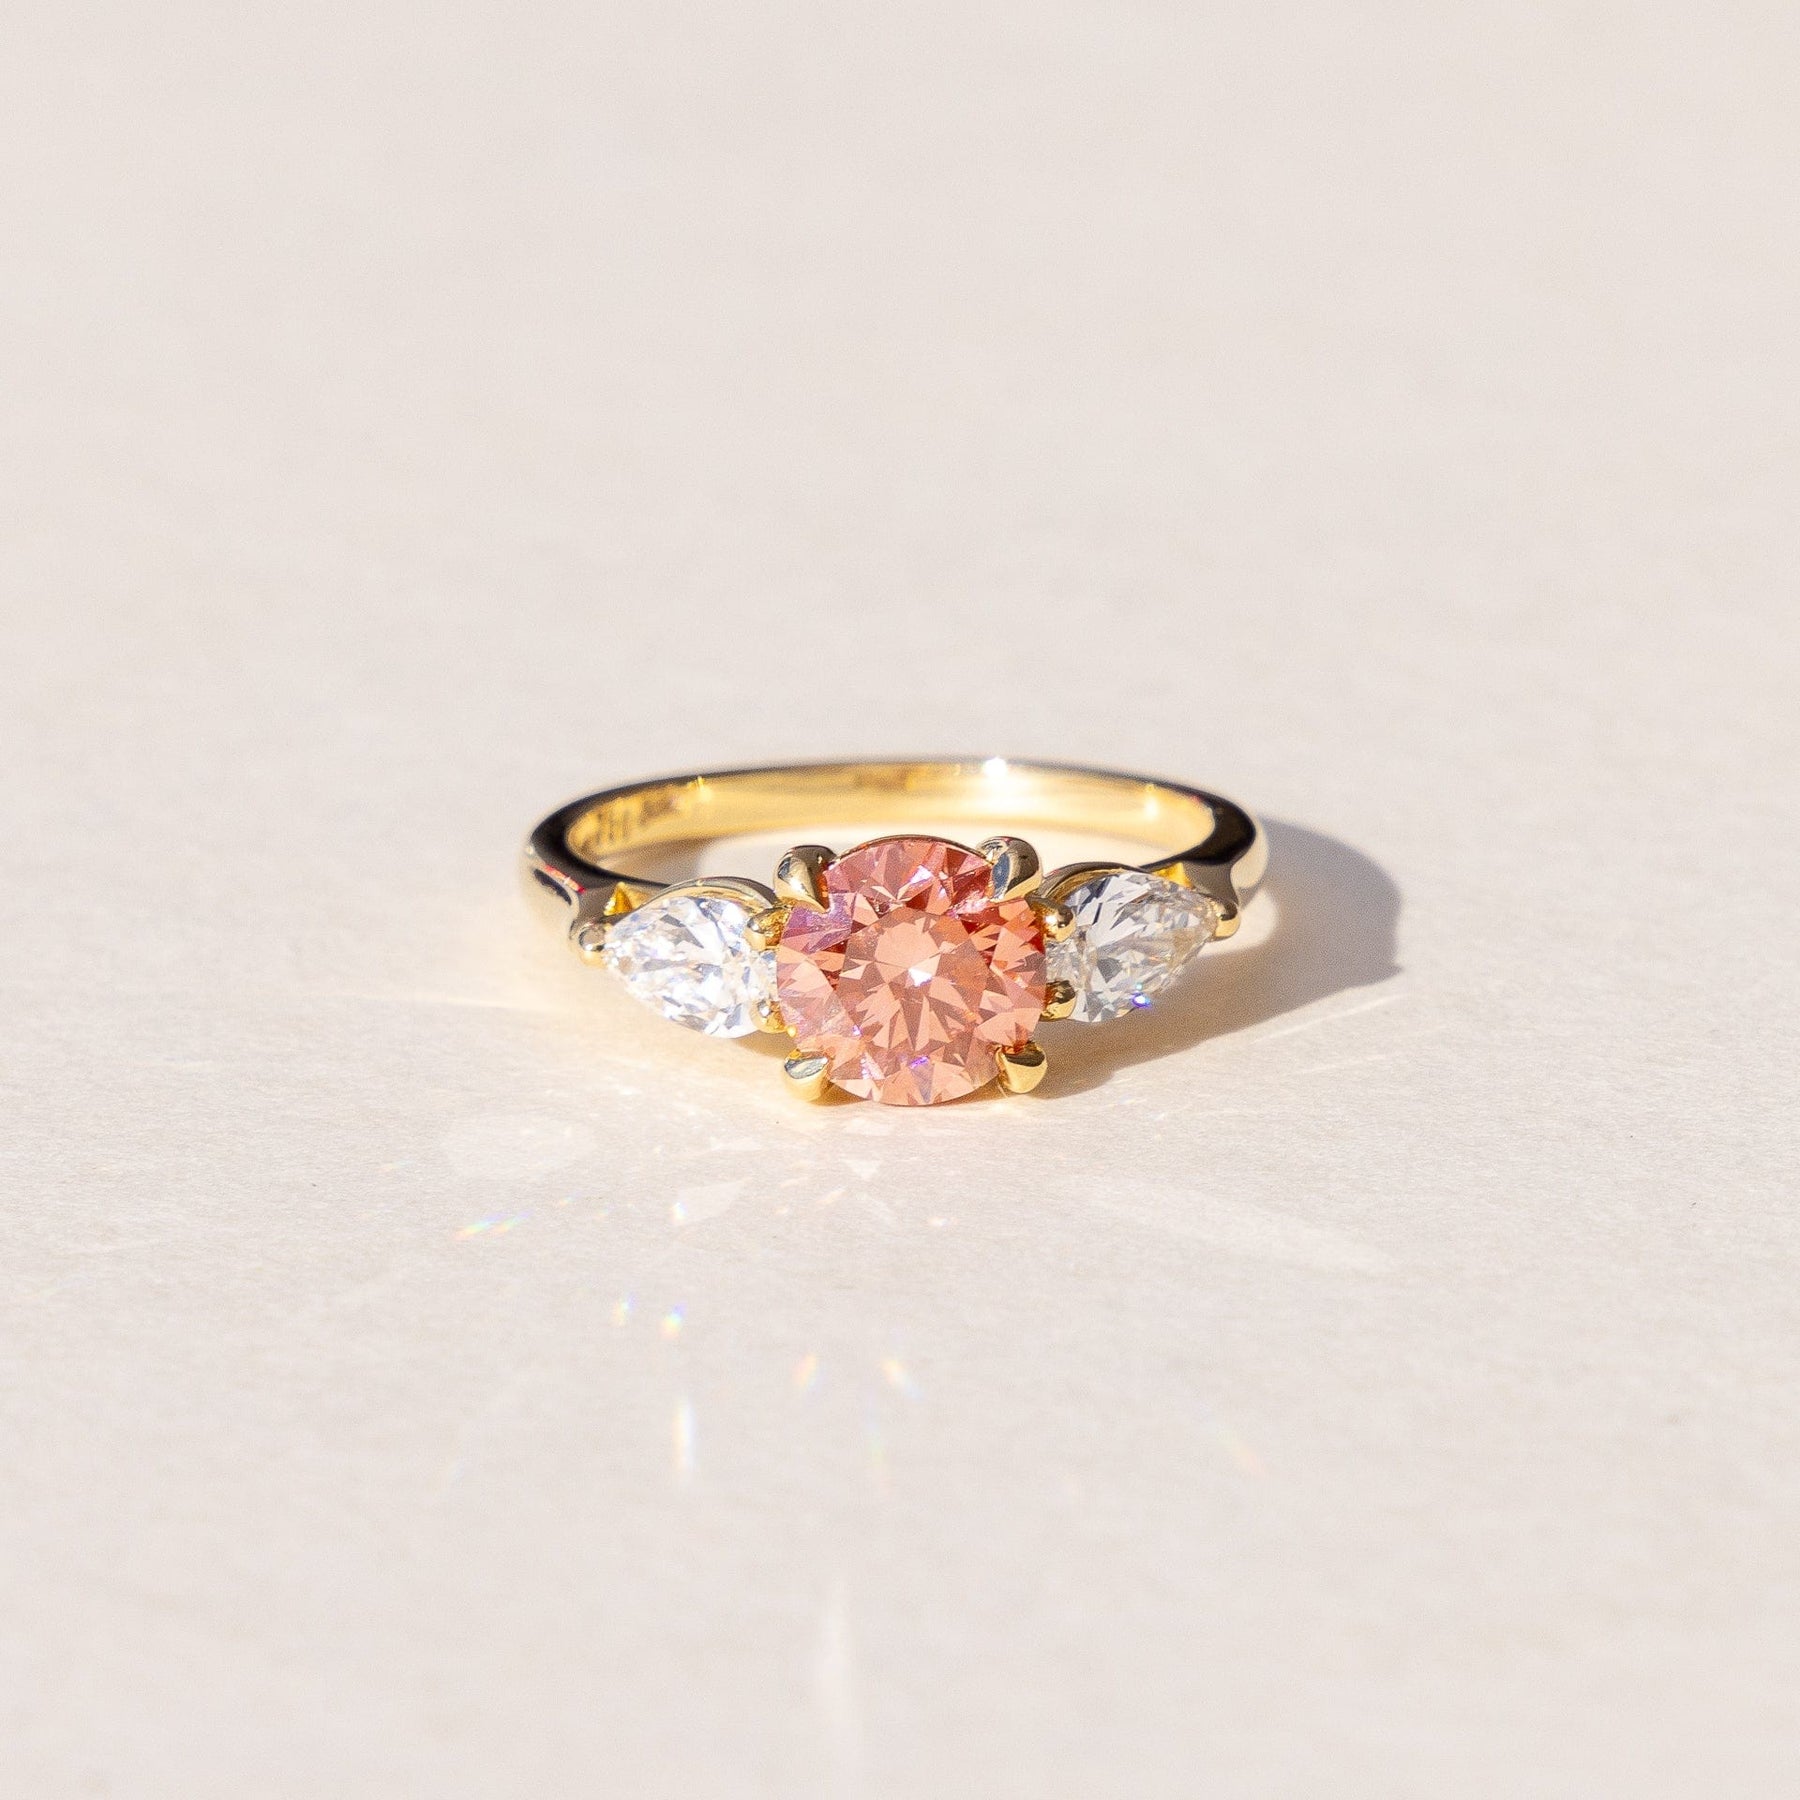 
Bespoke Handmade Lab Grown Pink Diamond Engagement Ring
